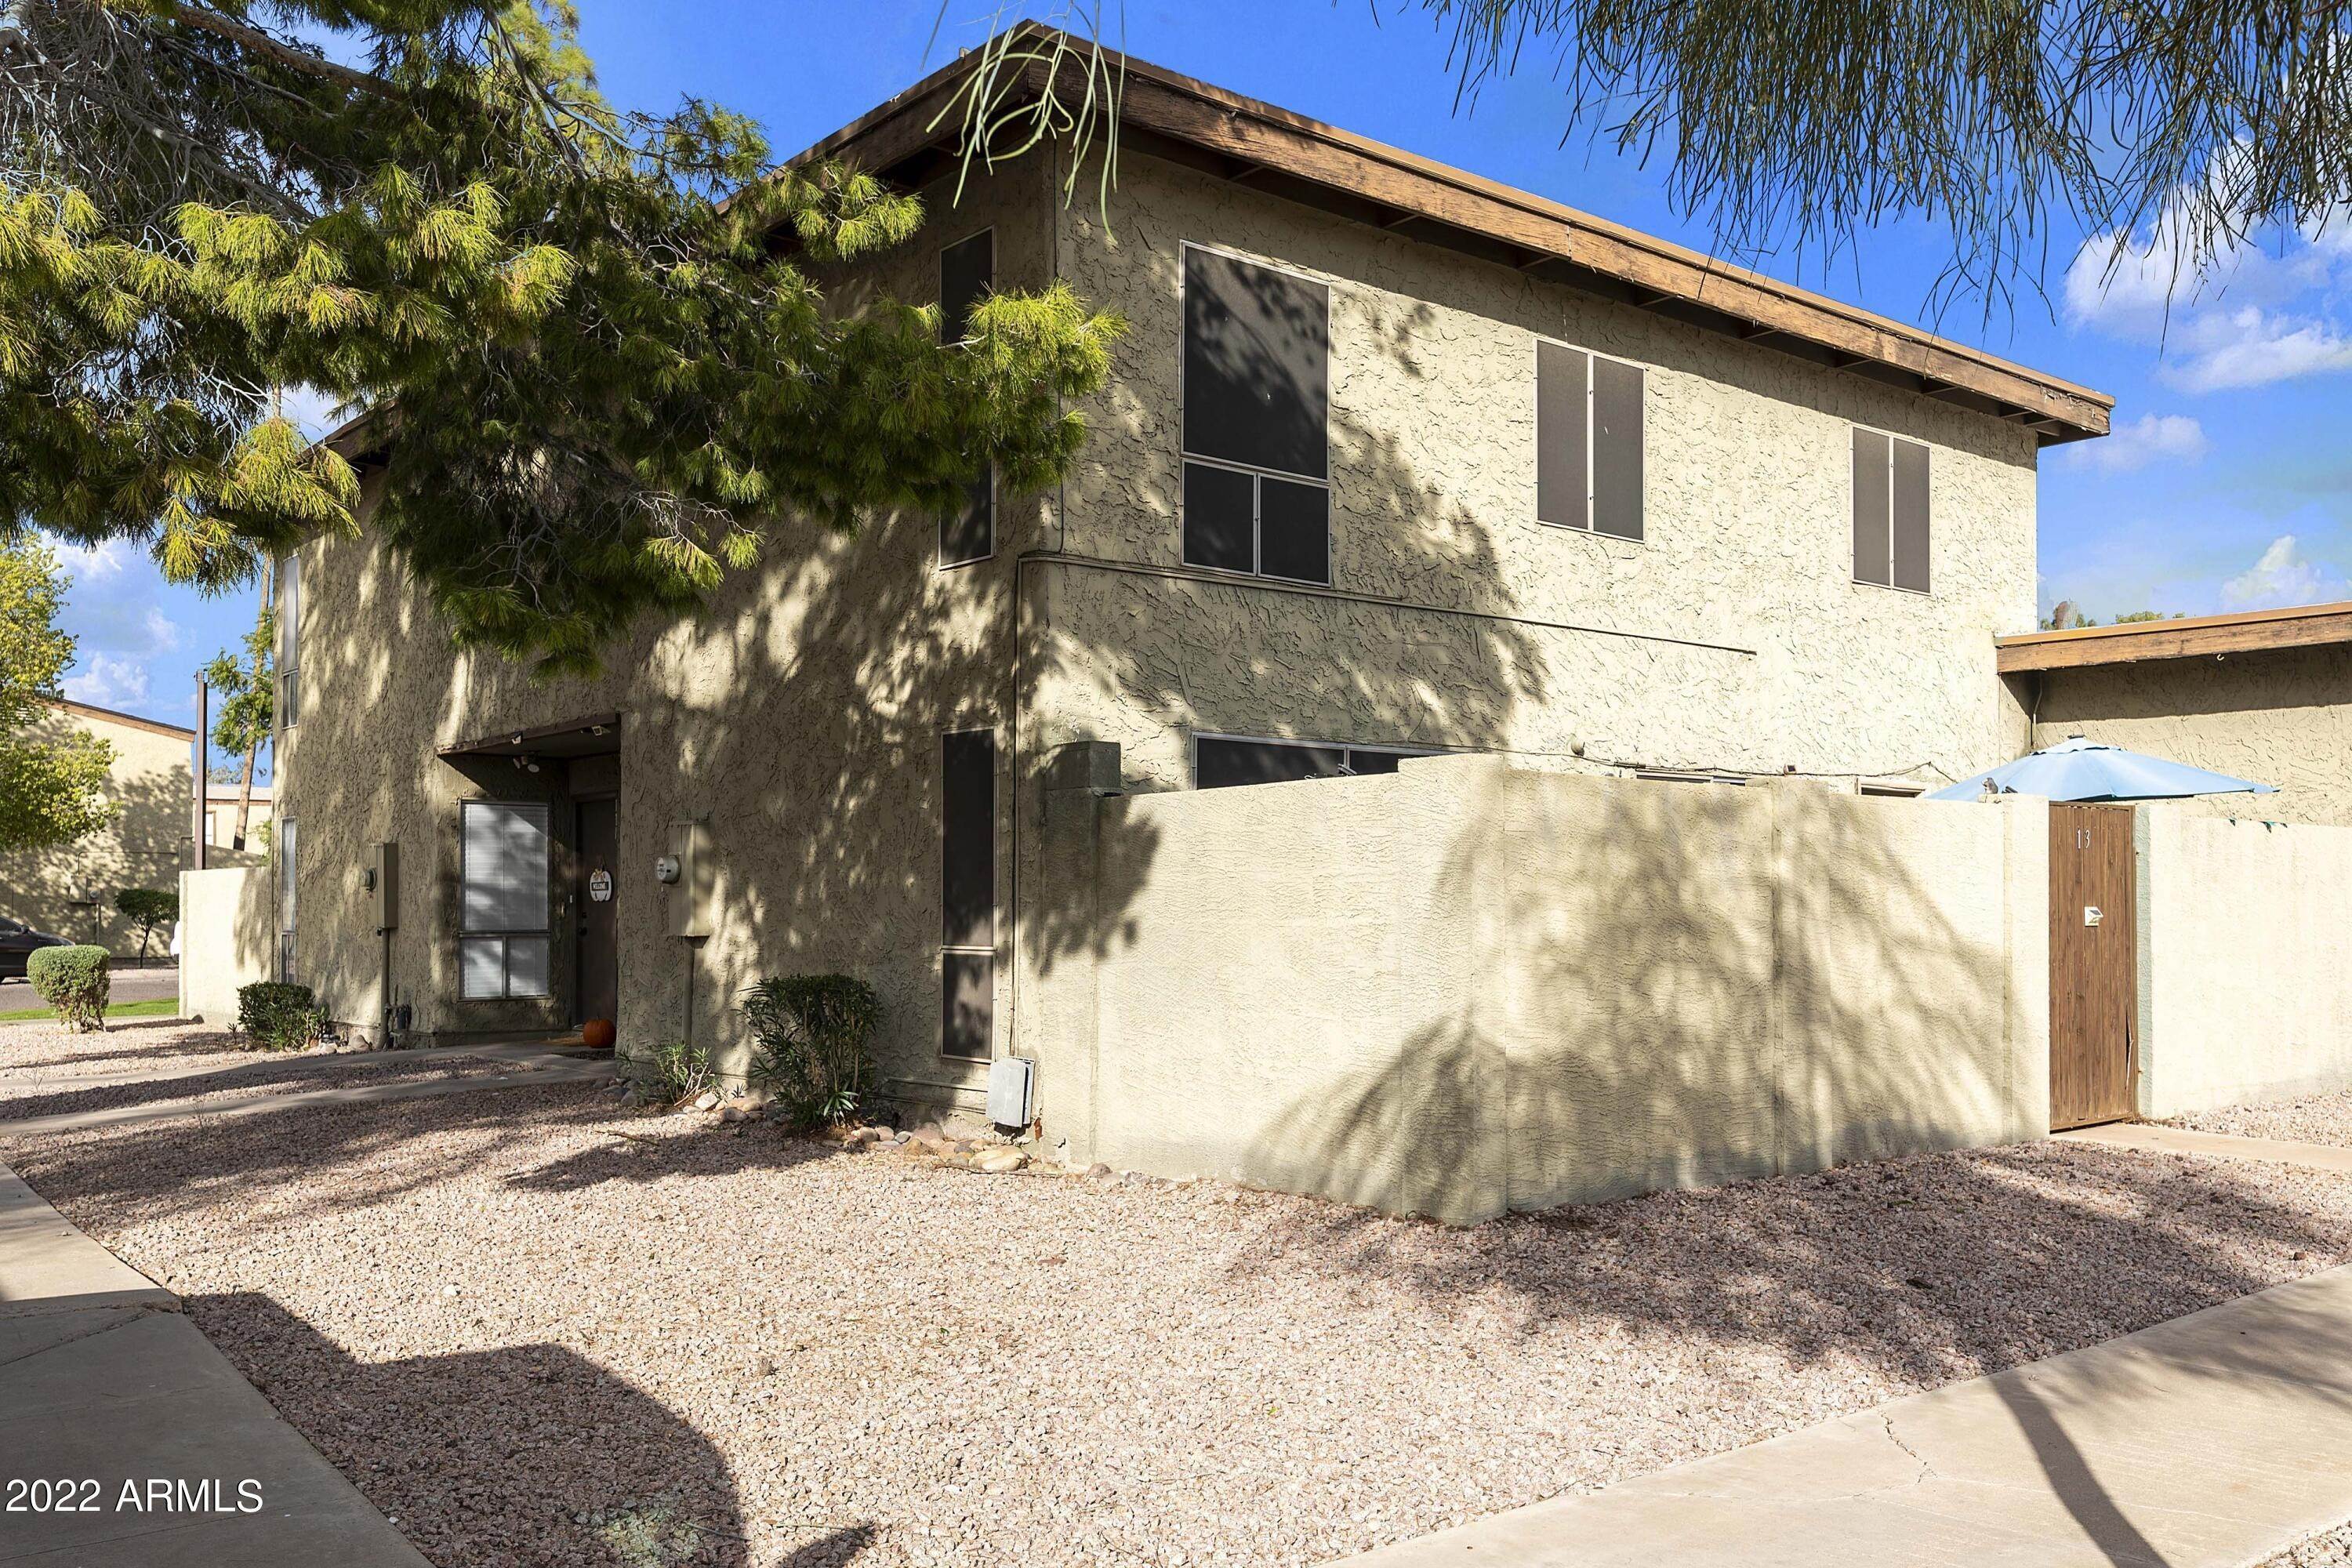 3. Townhouse for Sale at Mesa, AZ 85202